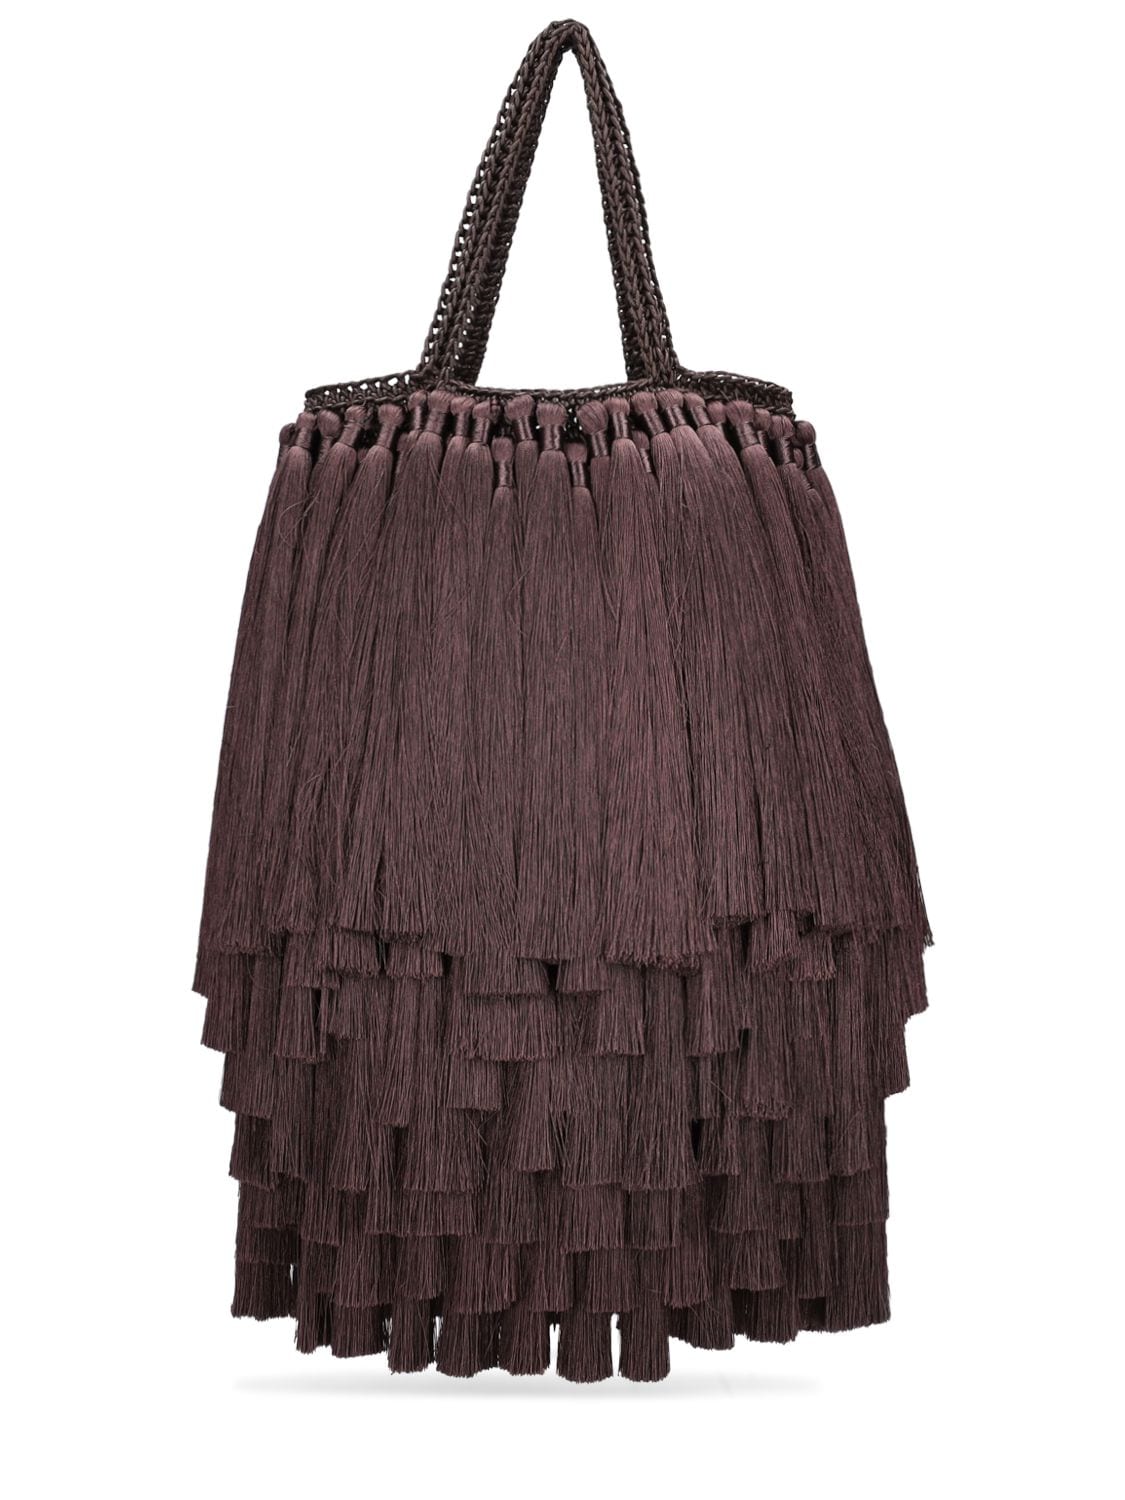 Victoria Beckham Lvr Exclusive Tassel Tote Bag In Brown